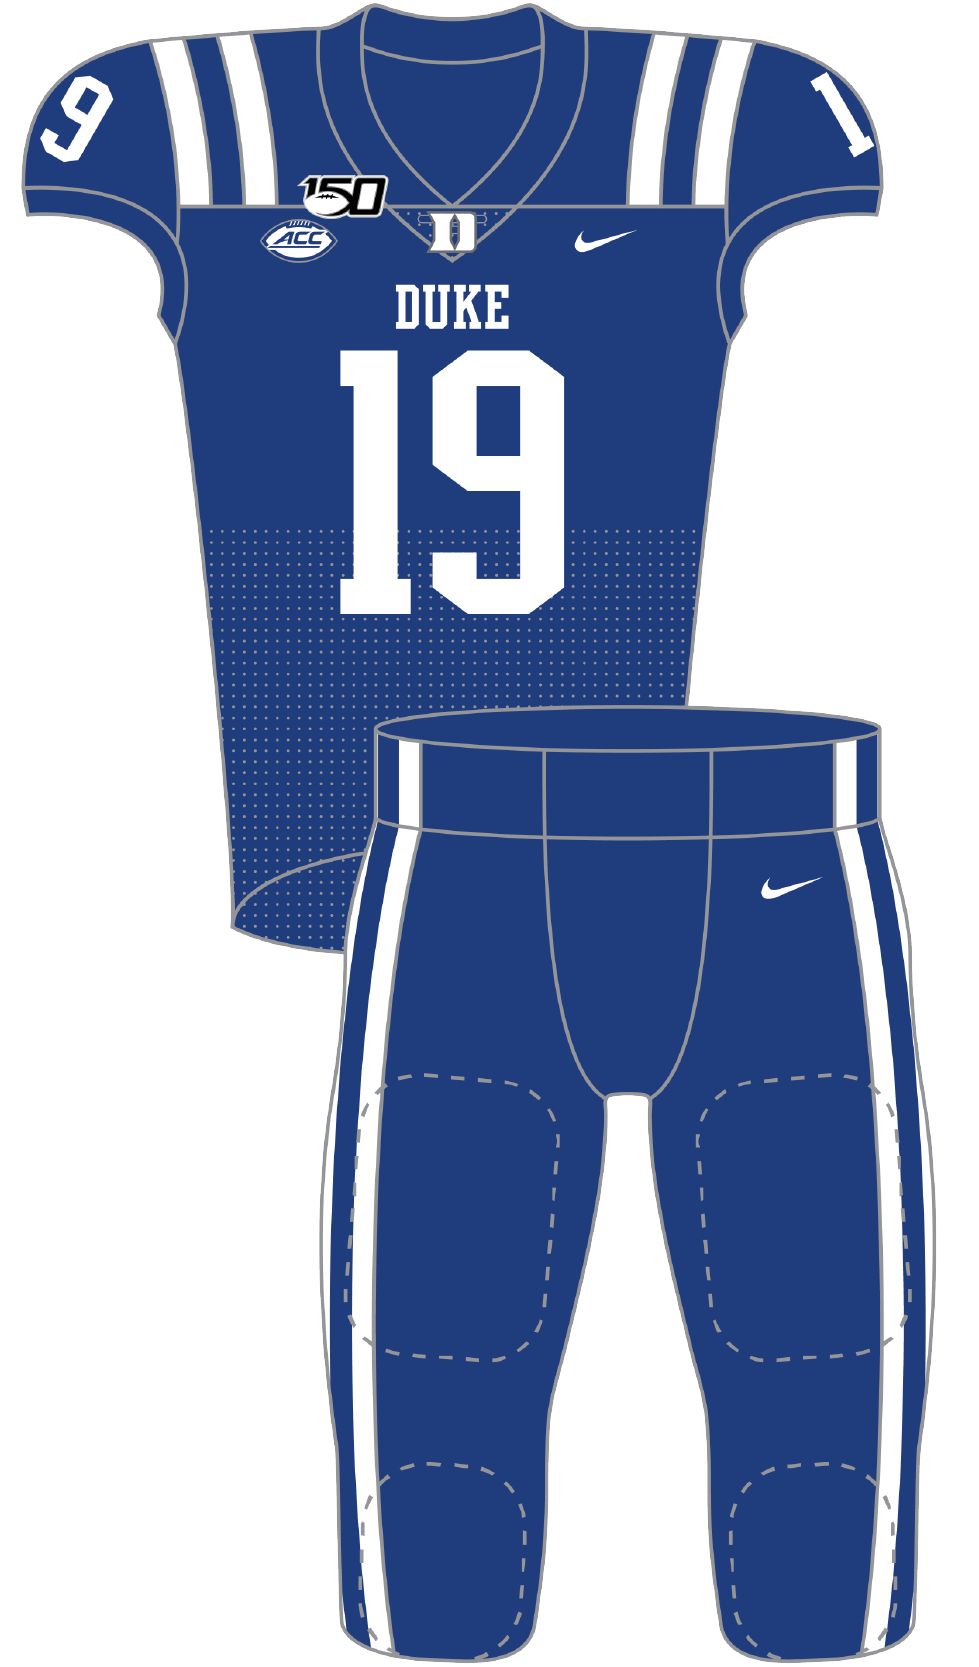 Duke 2019 Blue Uniform